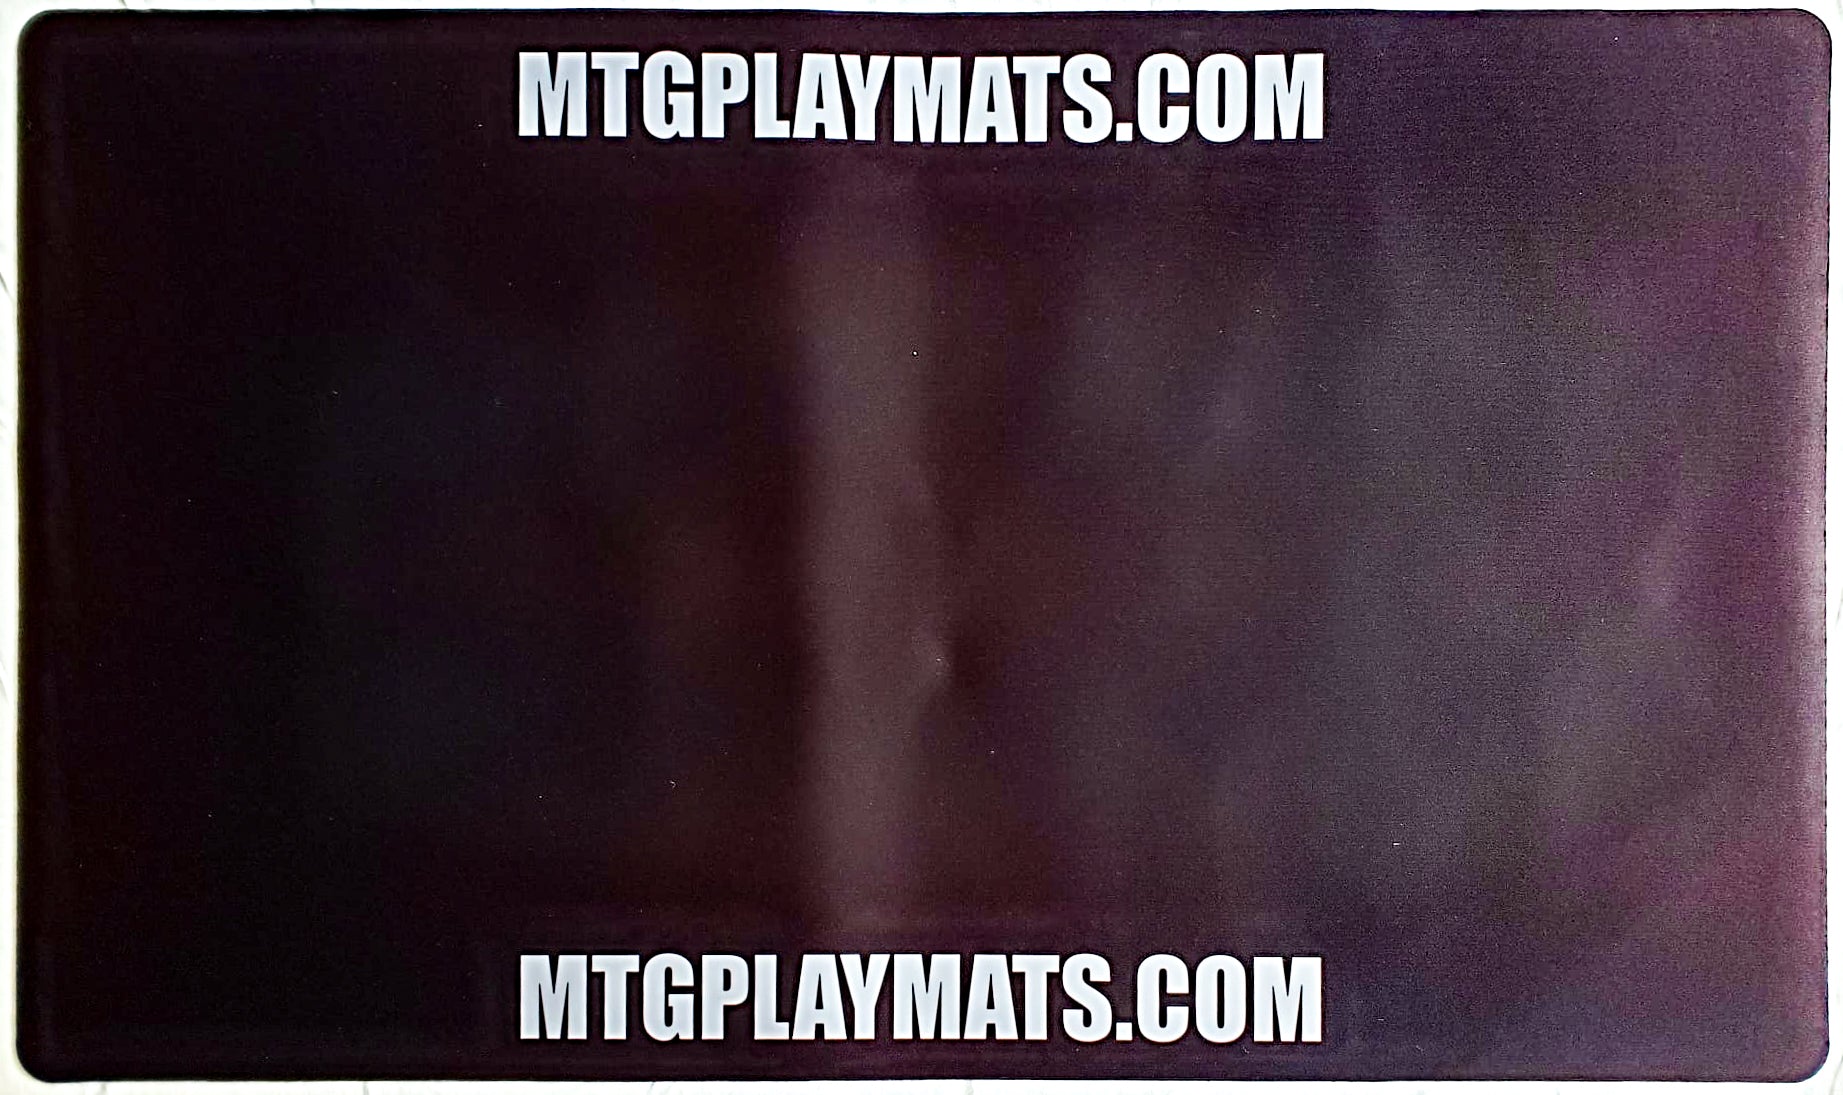 MTGPlaymats.com Official Playmat - MTG Playmat